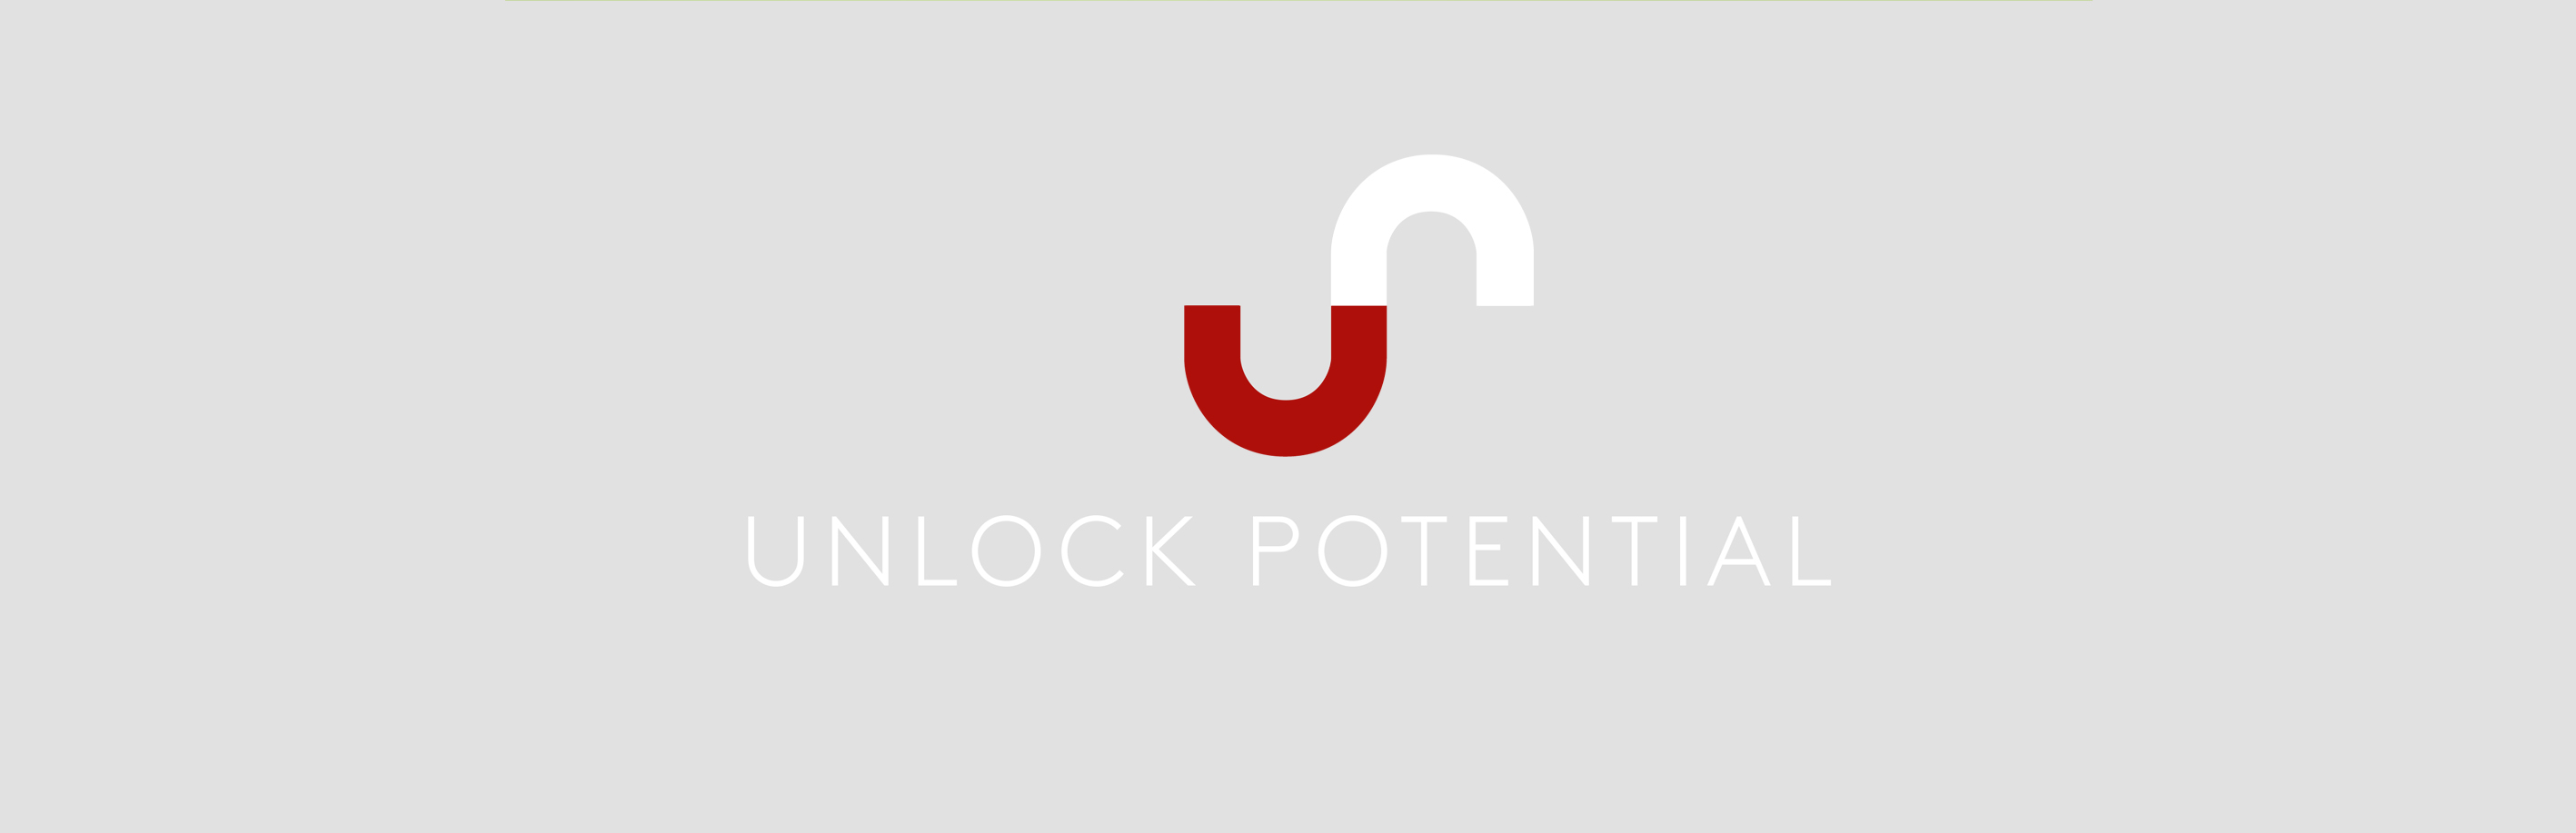 Unlock Potential